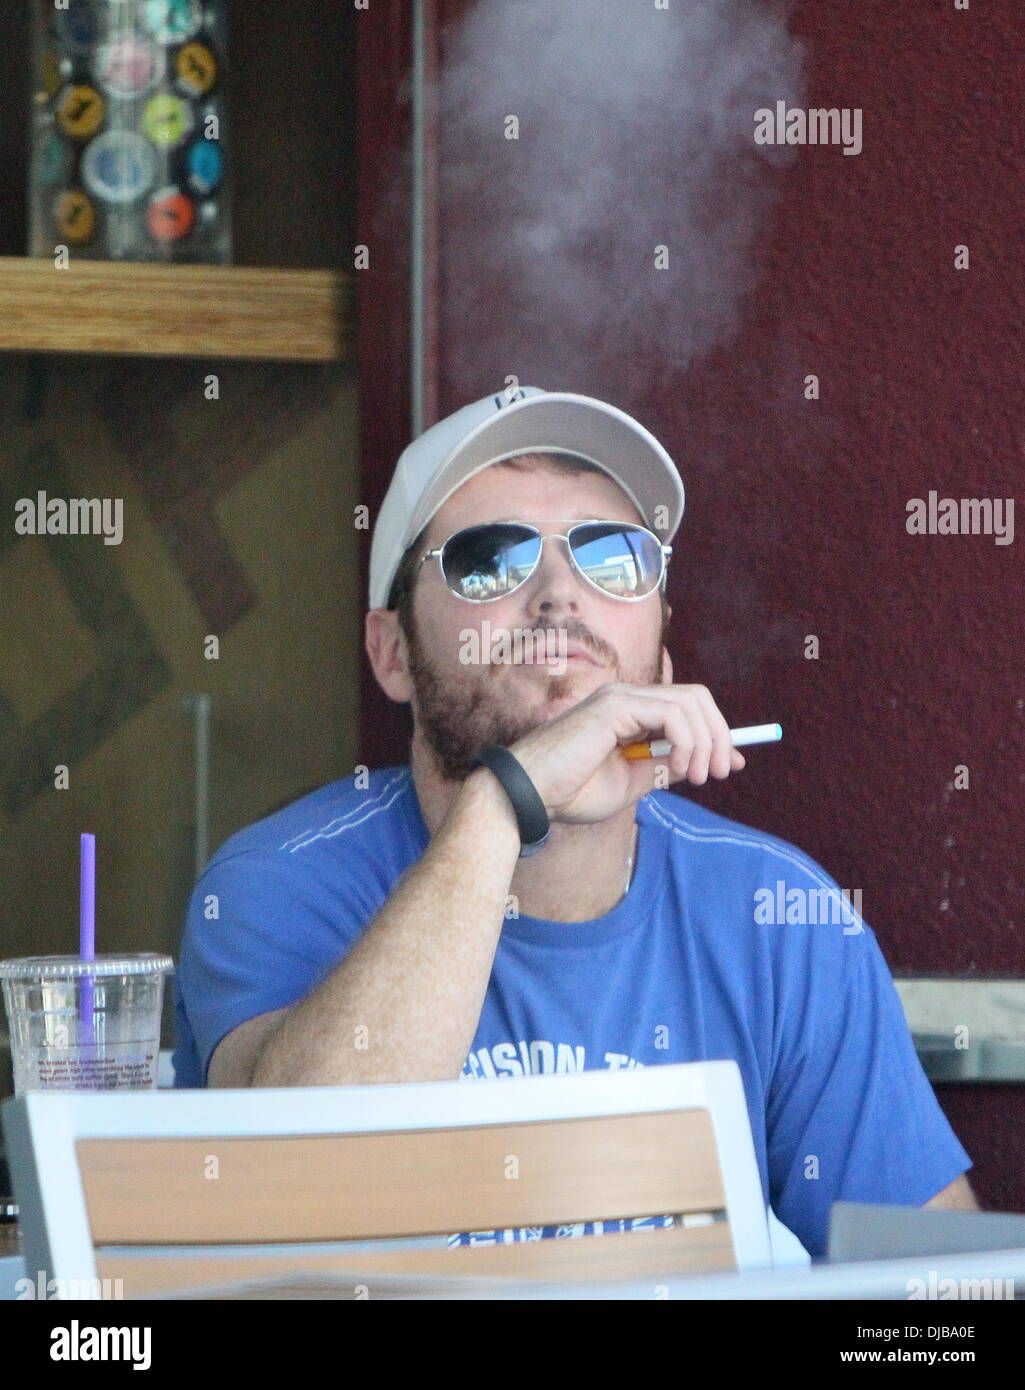 Kevin Connolly pali papierosa (lub trawkę)
